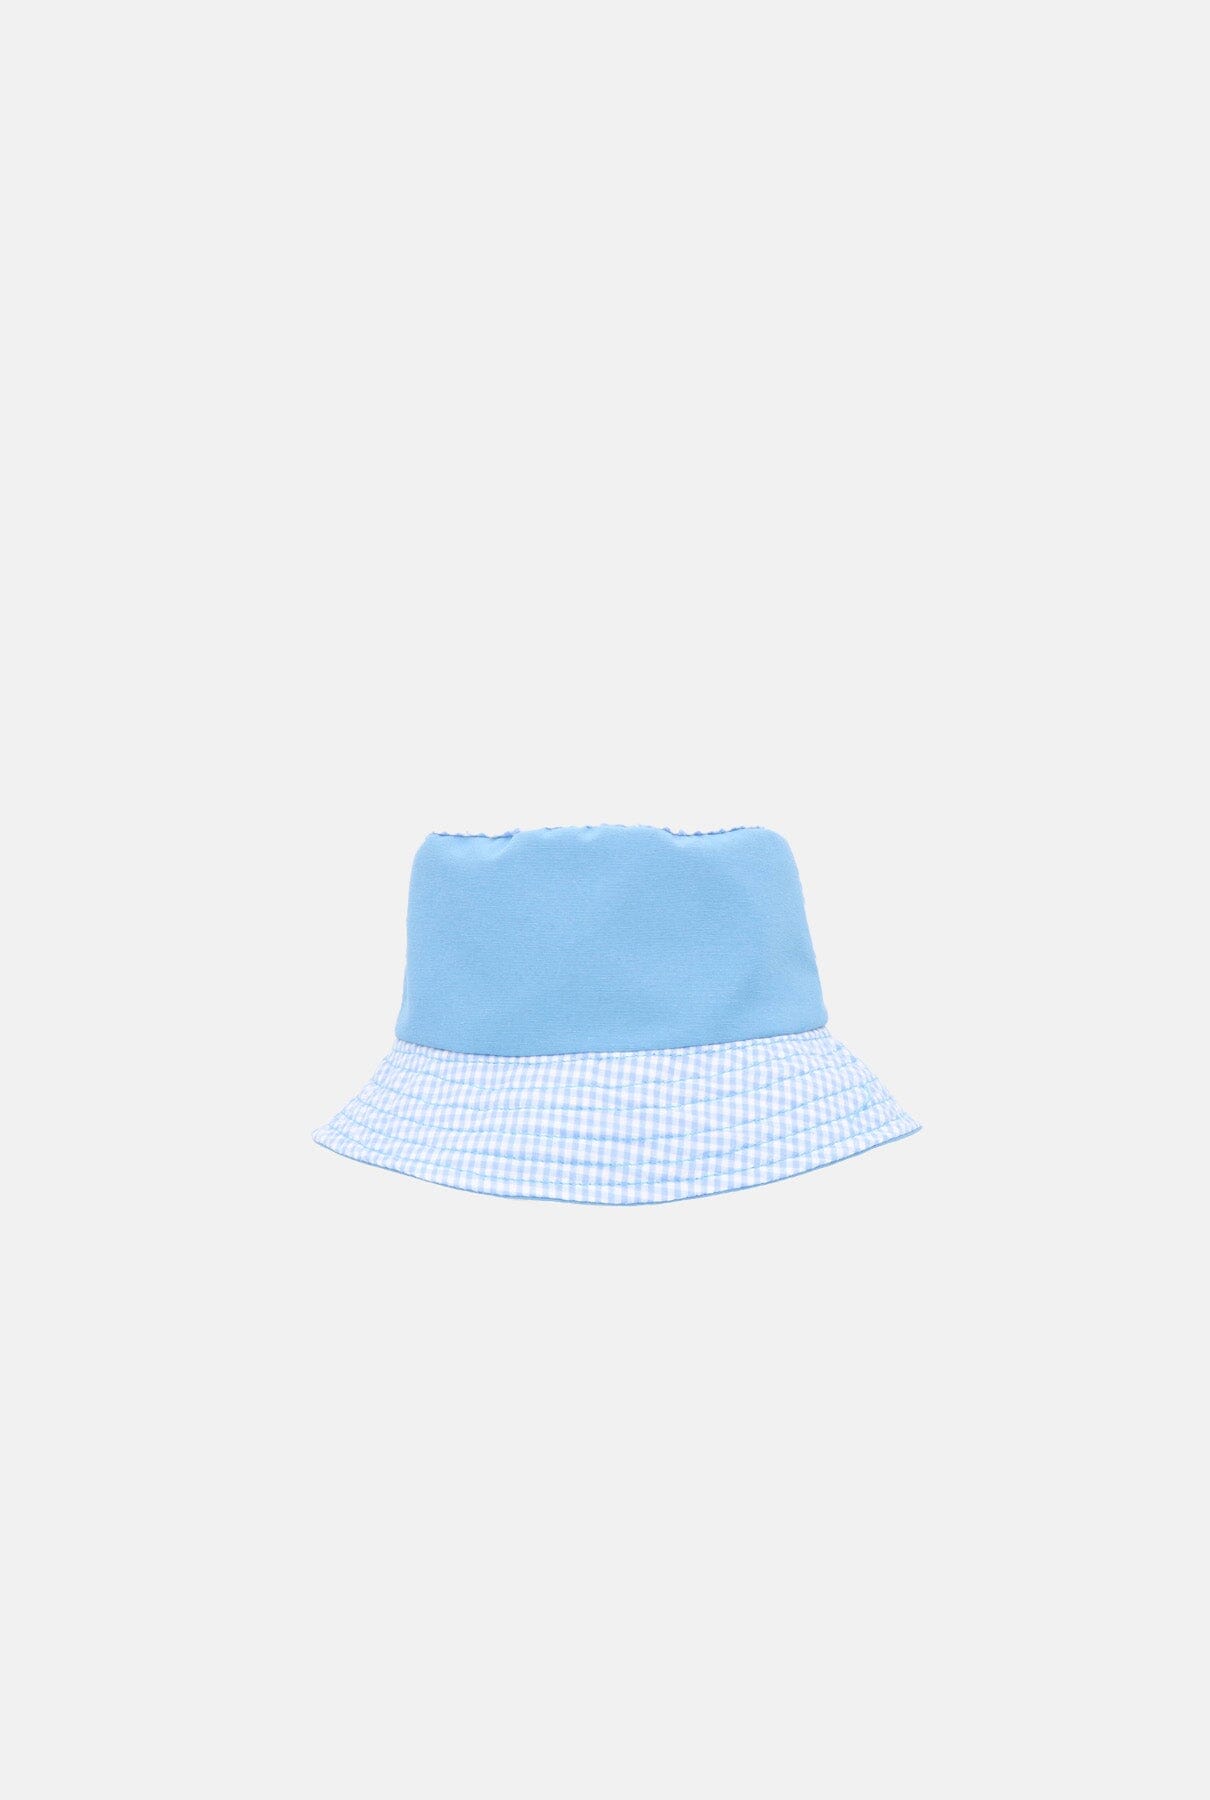 Reversible Block-Vichy blue hat Hats Gakomi 